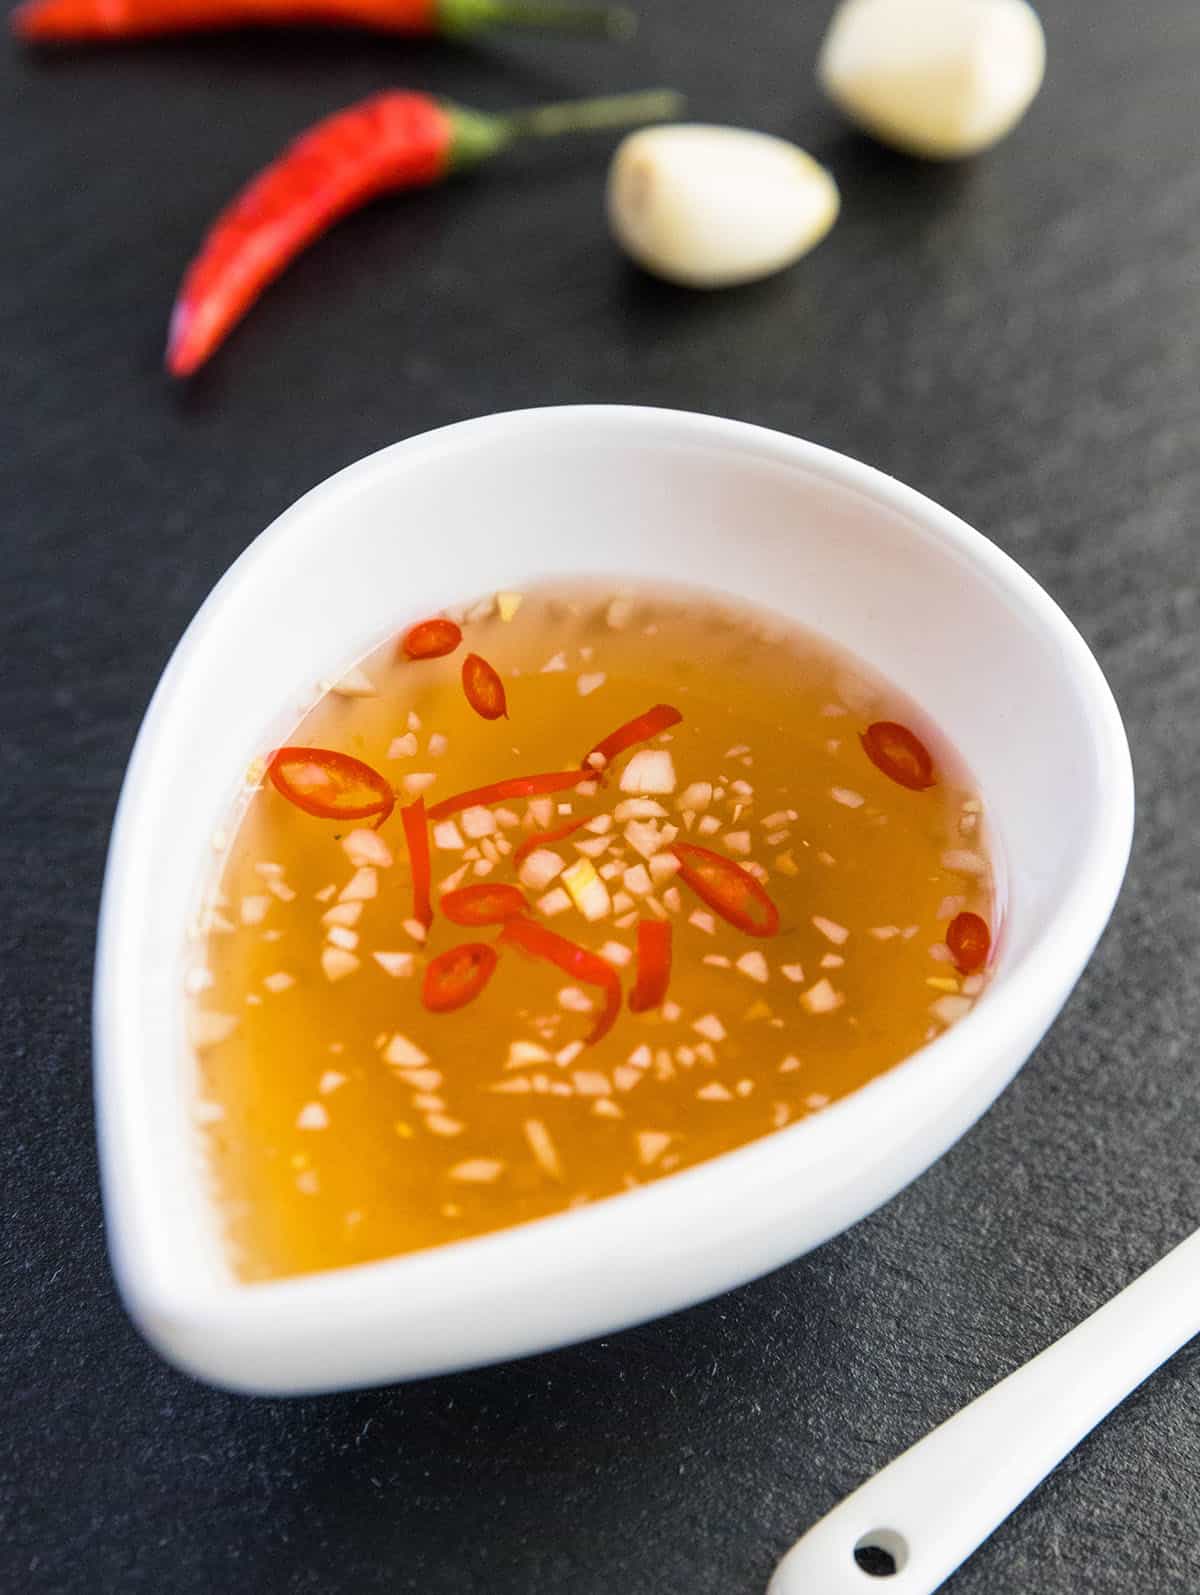 Vietnamese fish sauce prepared with garlic and chilis.